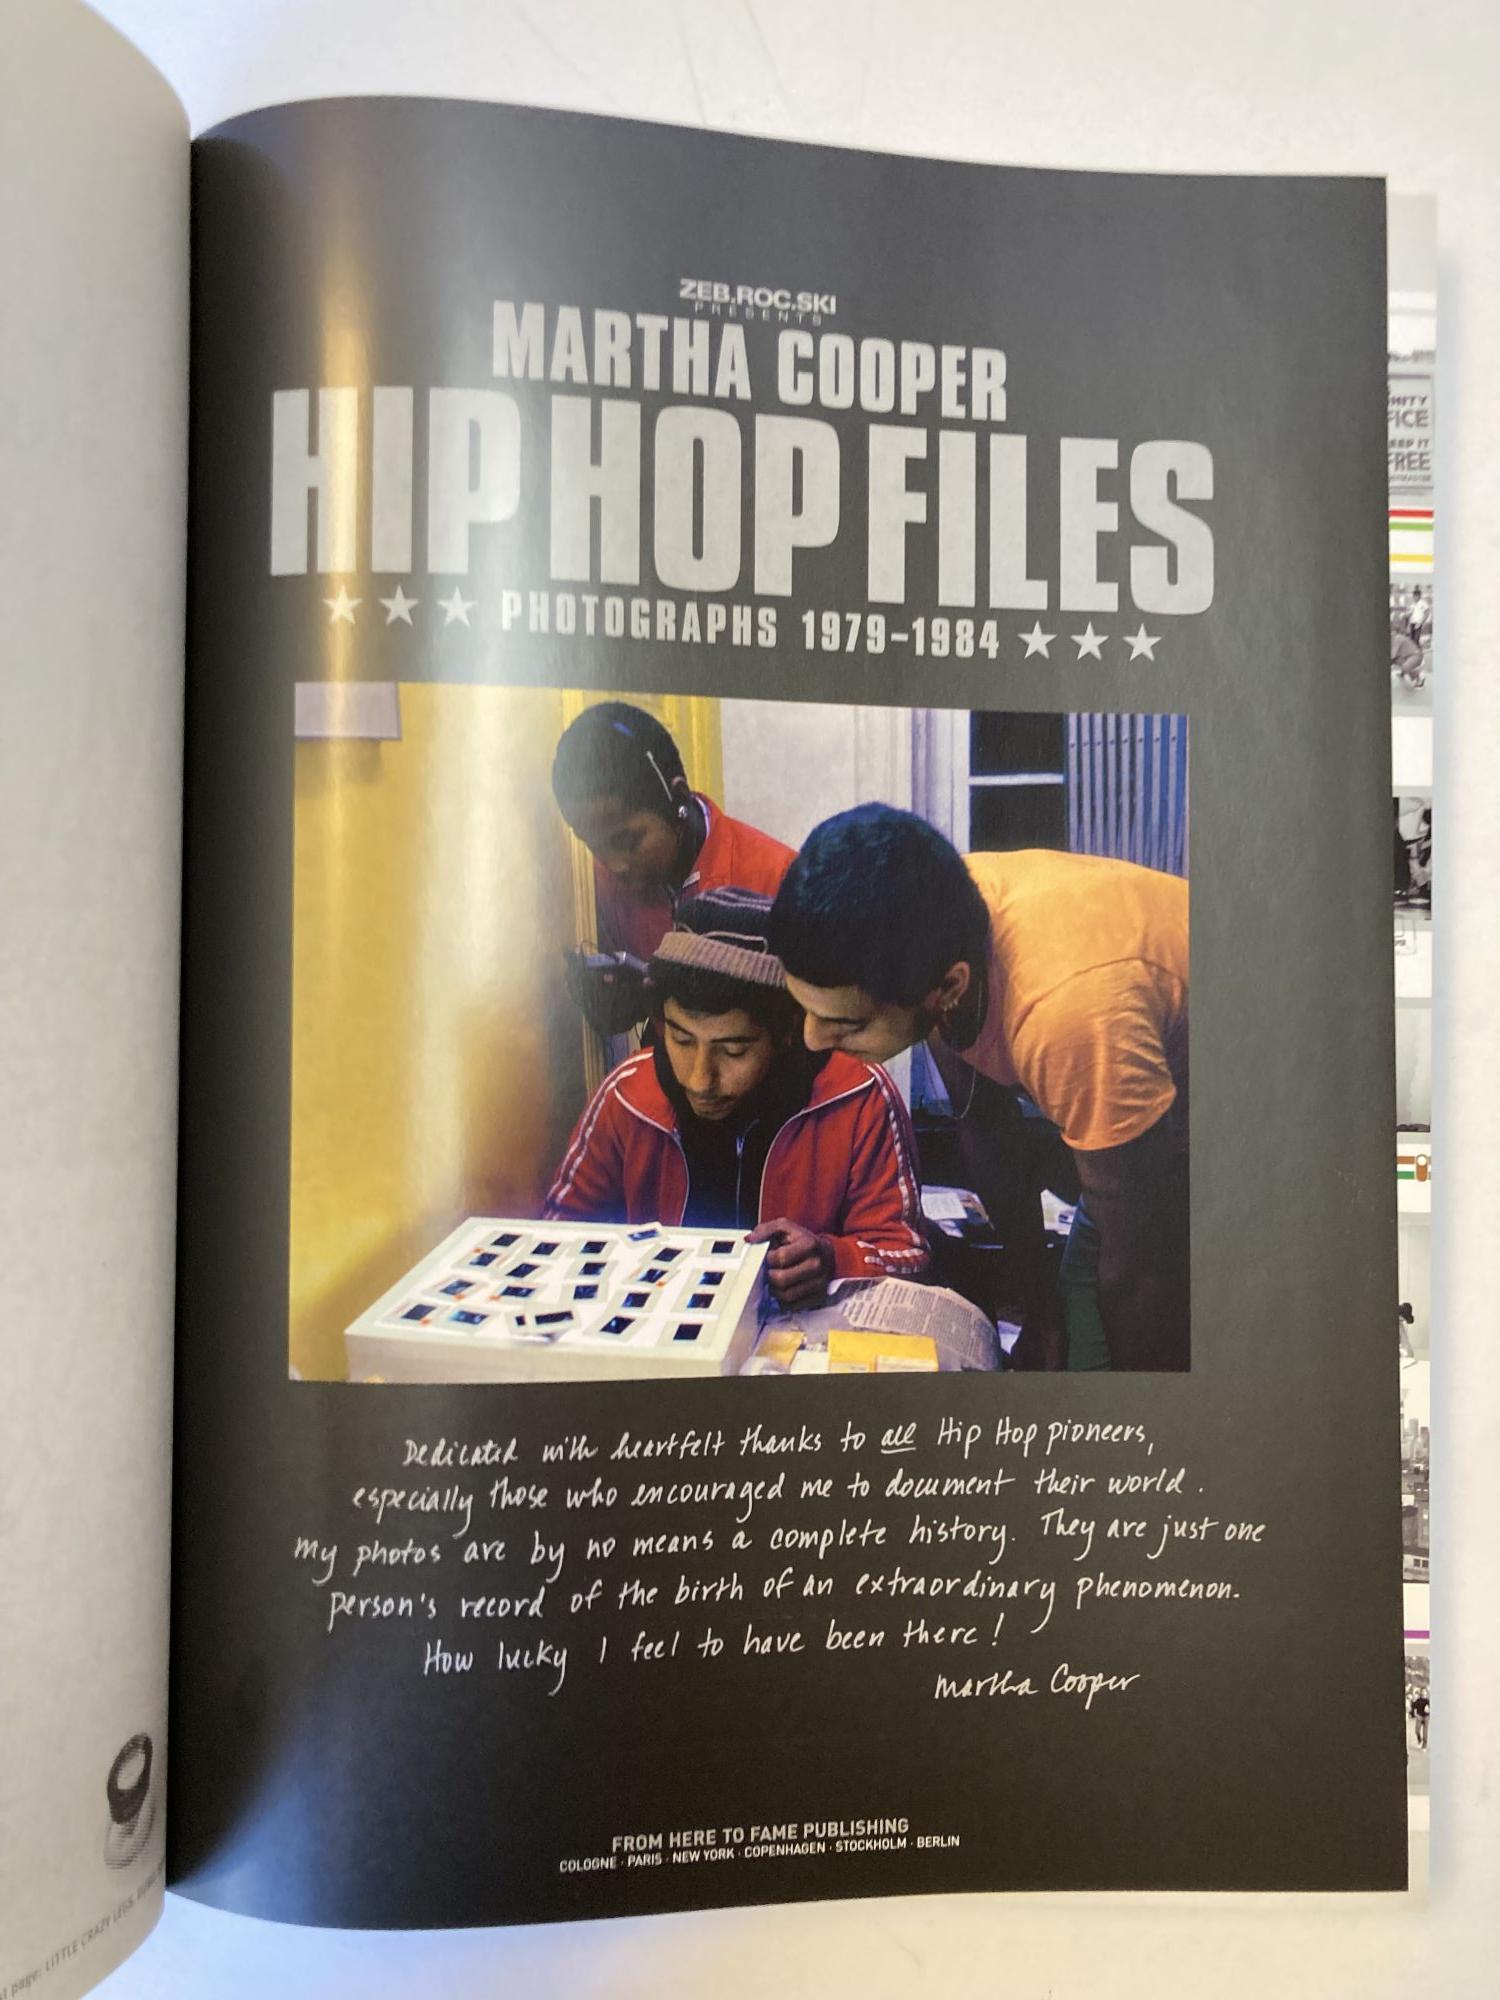 HIP HOP FILES: PHOTOGRAPHS 1979-1984 | Martha Cooper | First Edition